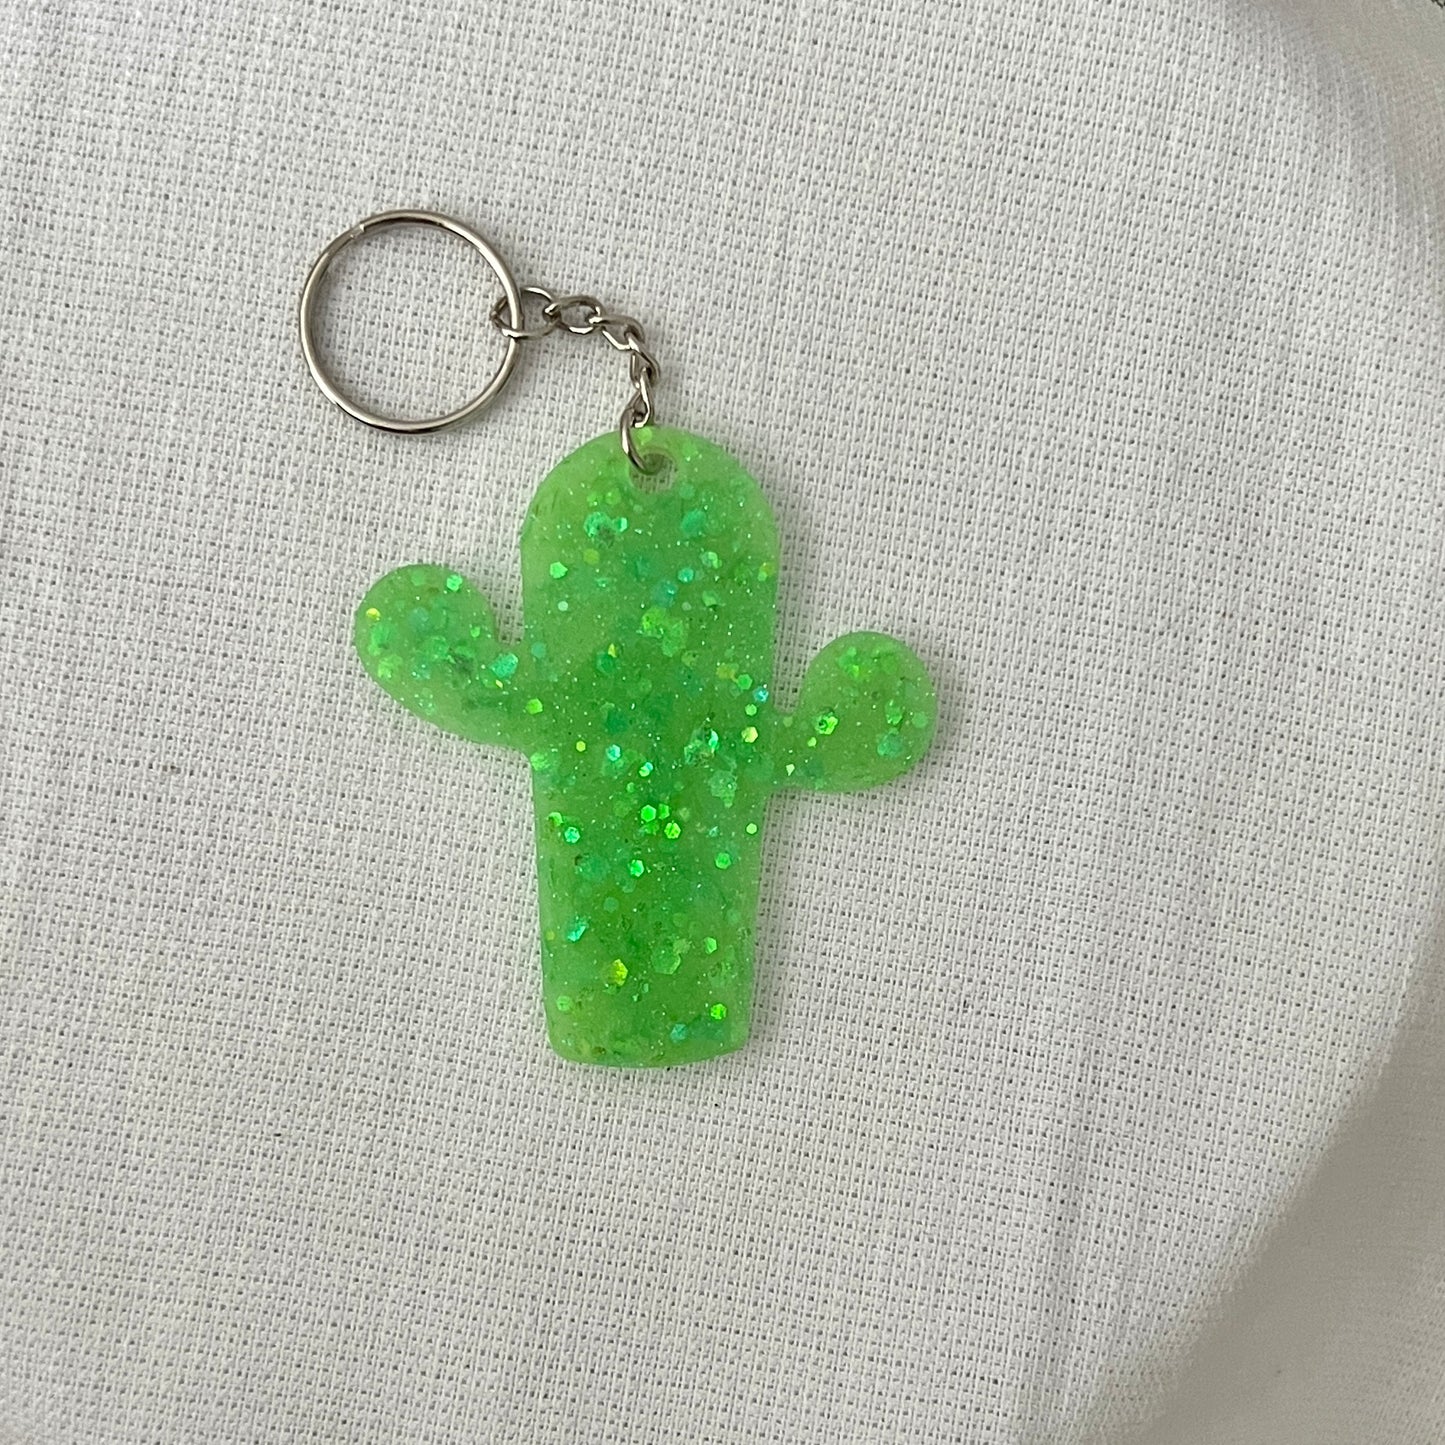 Cactus Keychain/Ornament